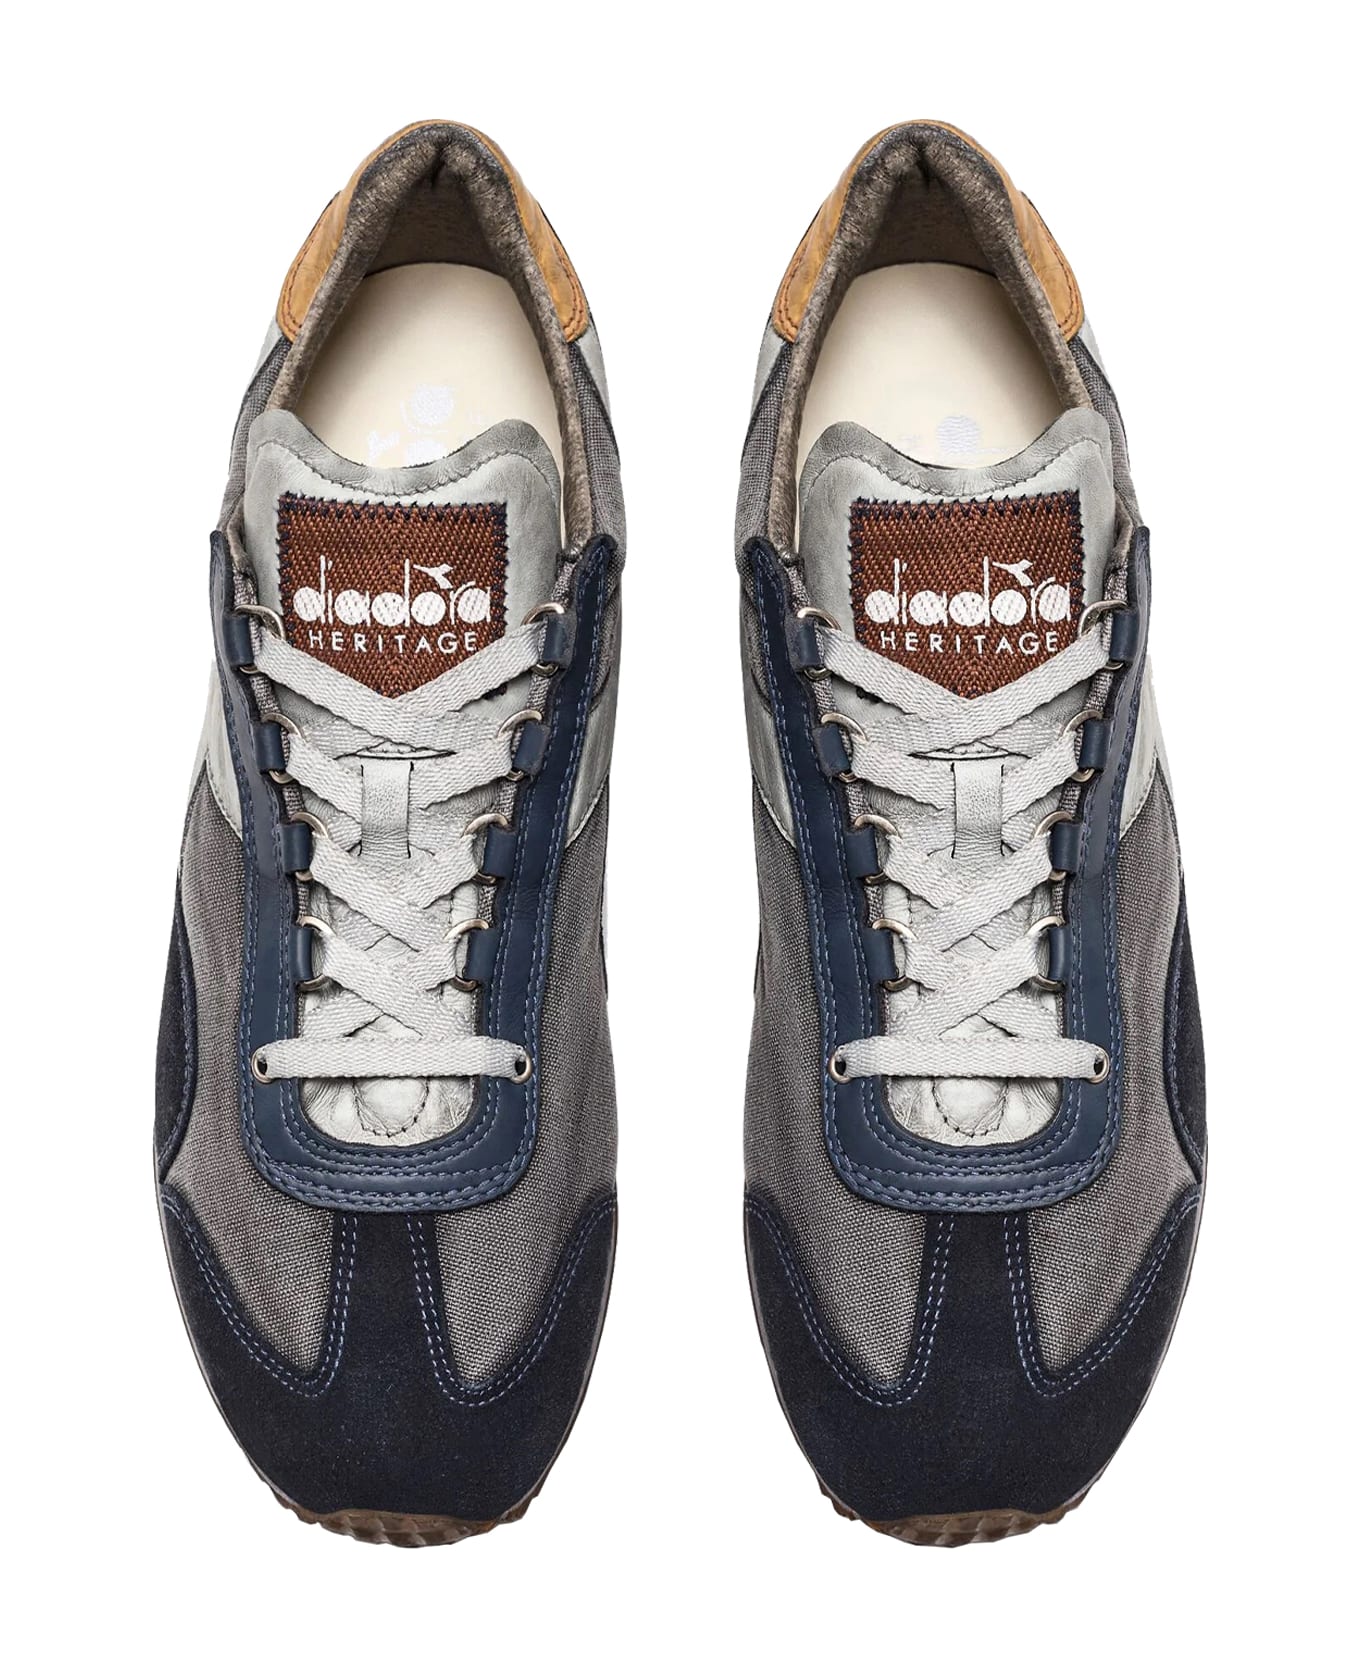 Diadora Heritage Sneakers - Blue スニーカー